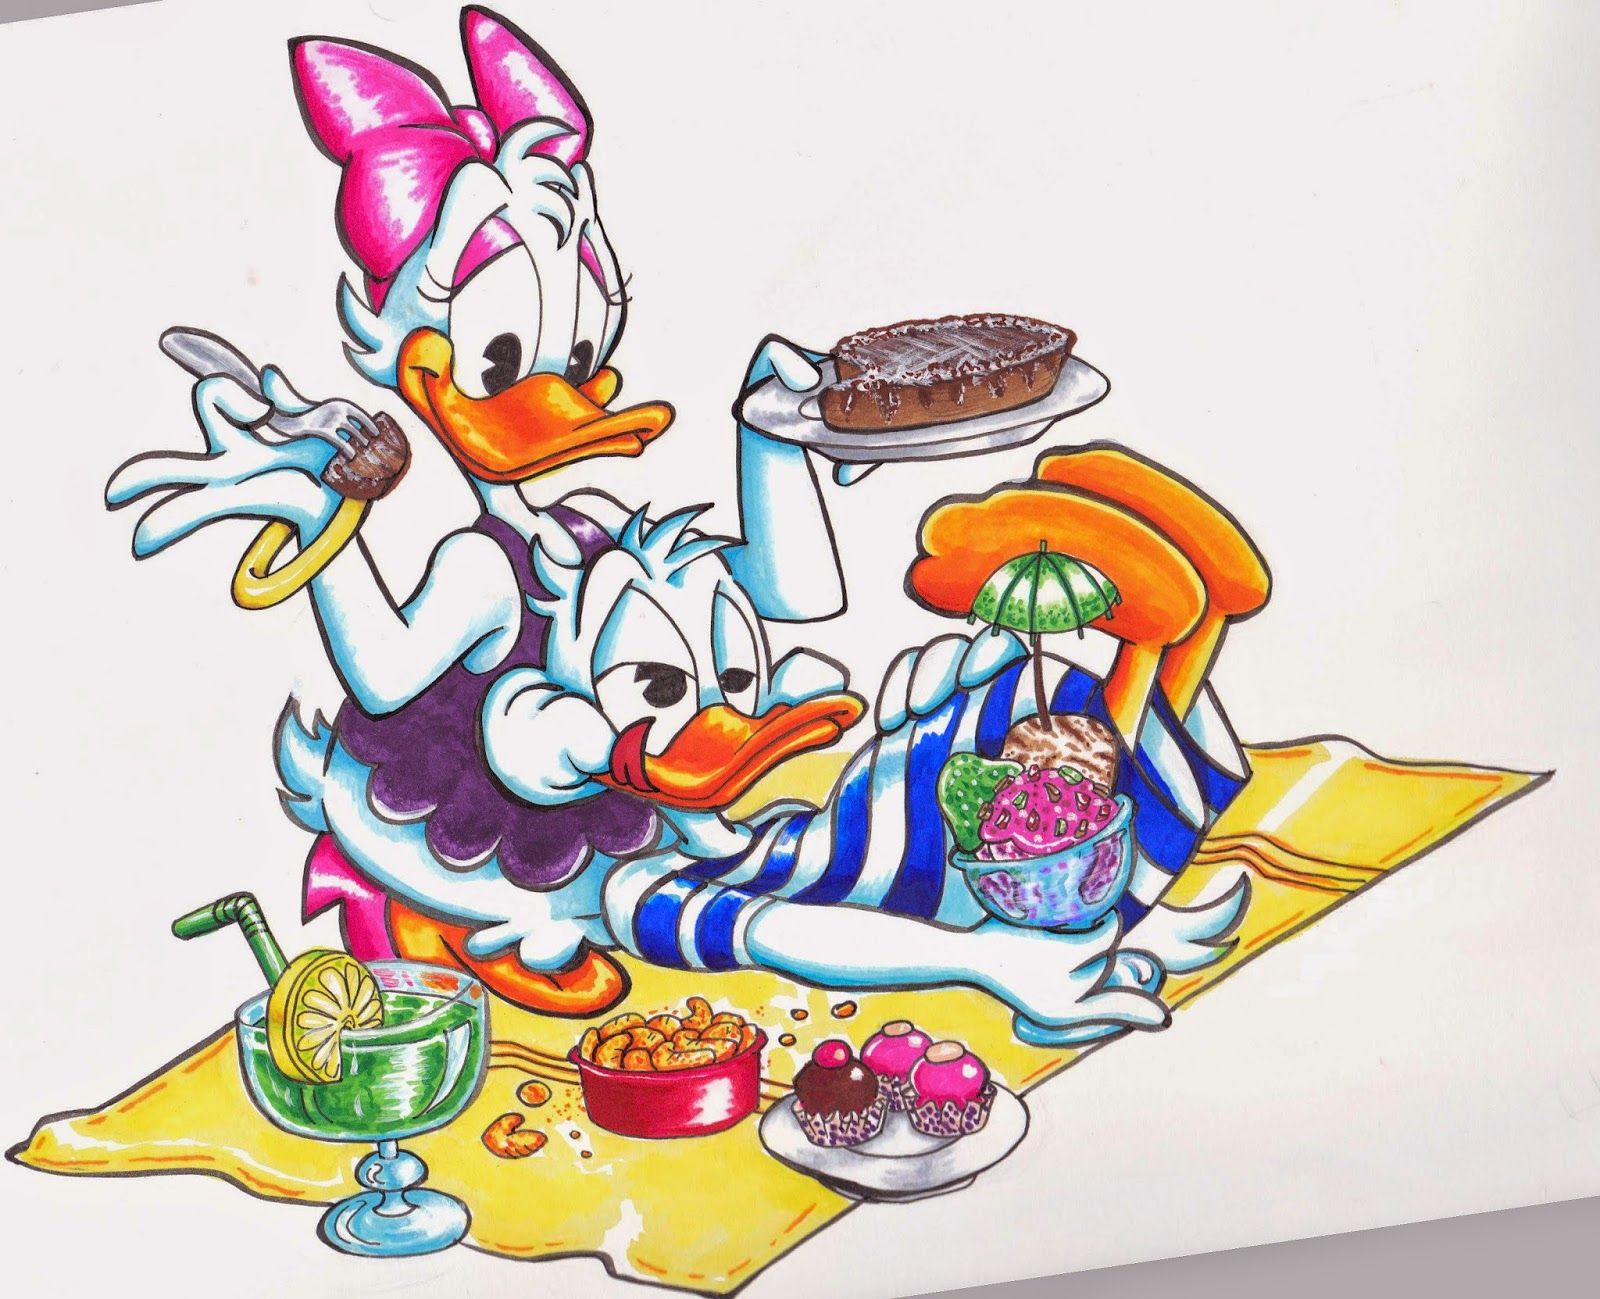 Daisy Duck Wallpaper